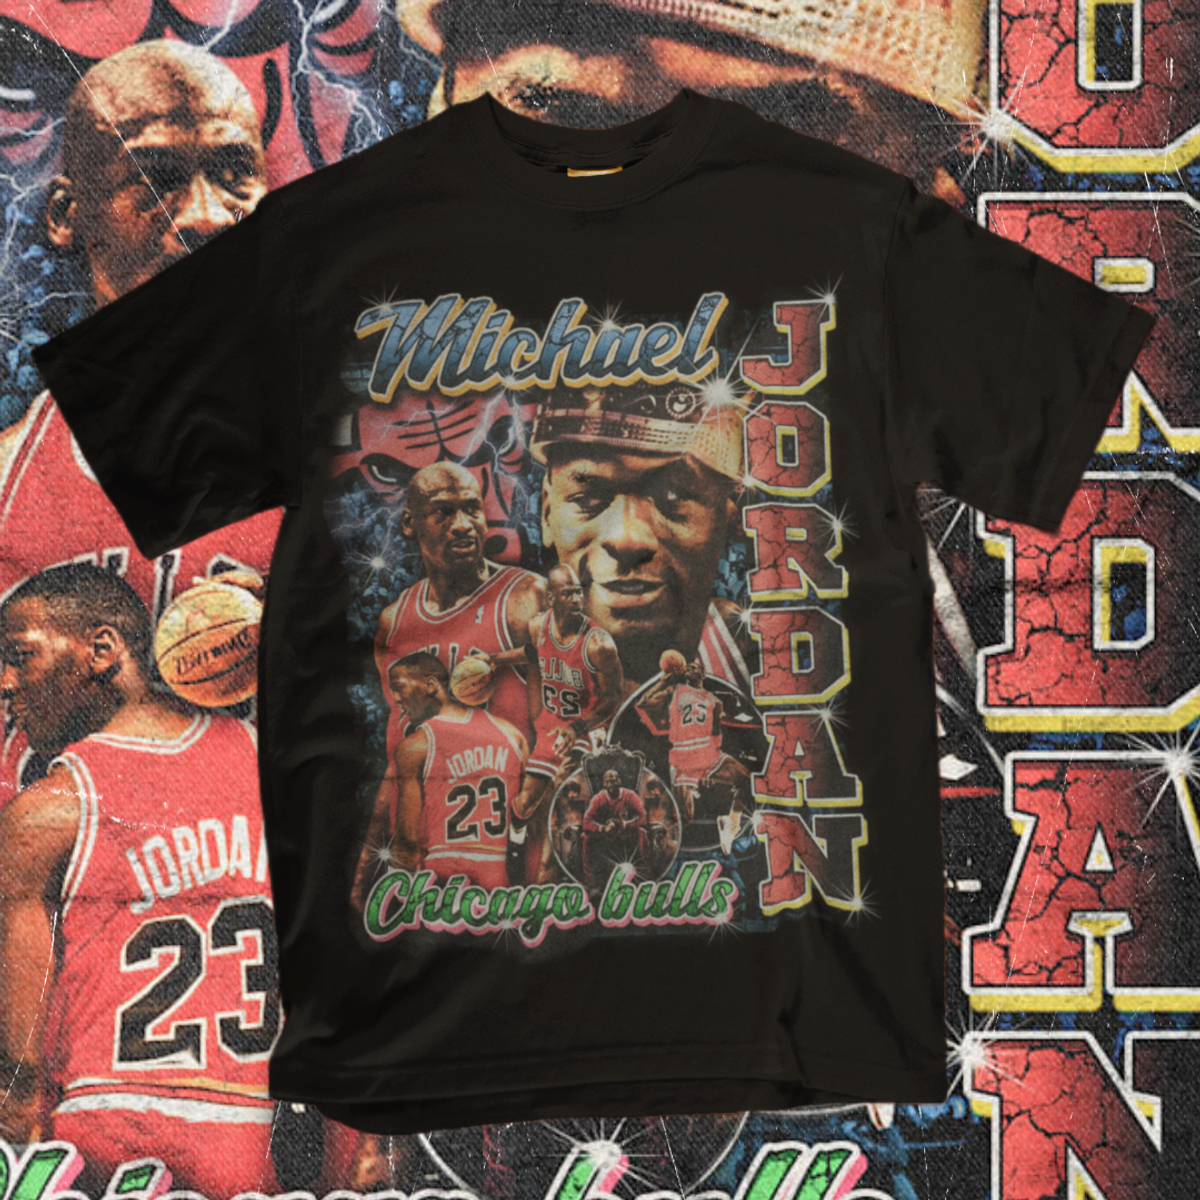 Nome do produto: Camiseta Michael Jordan